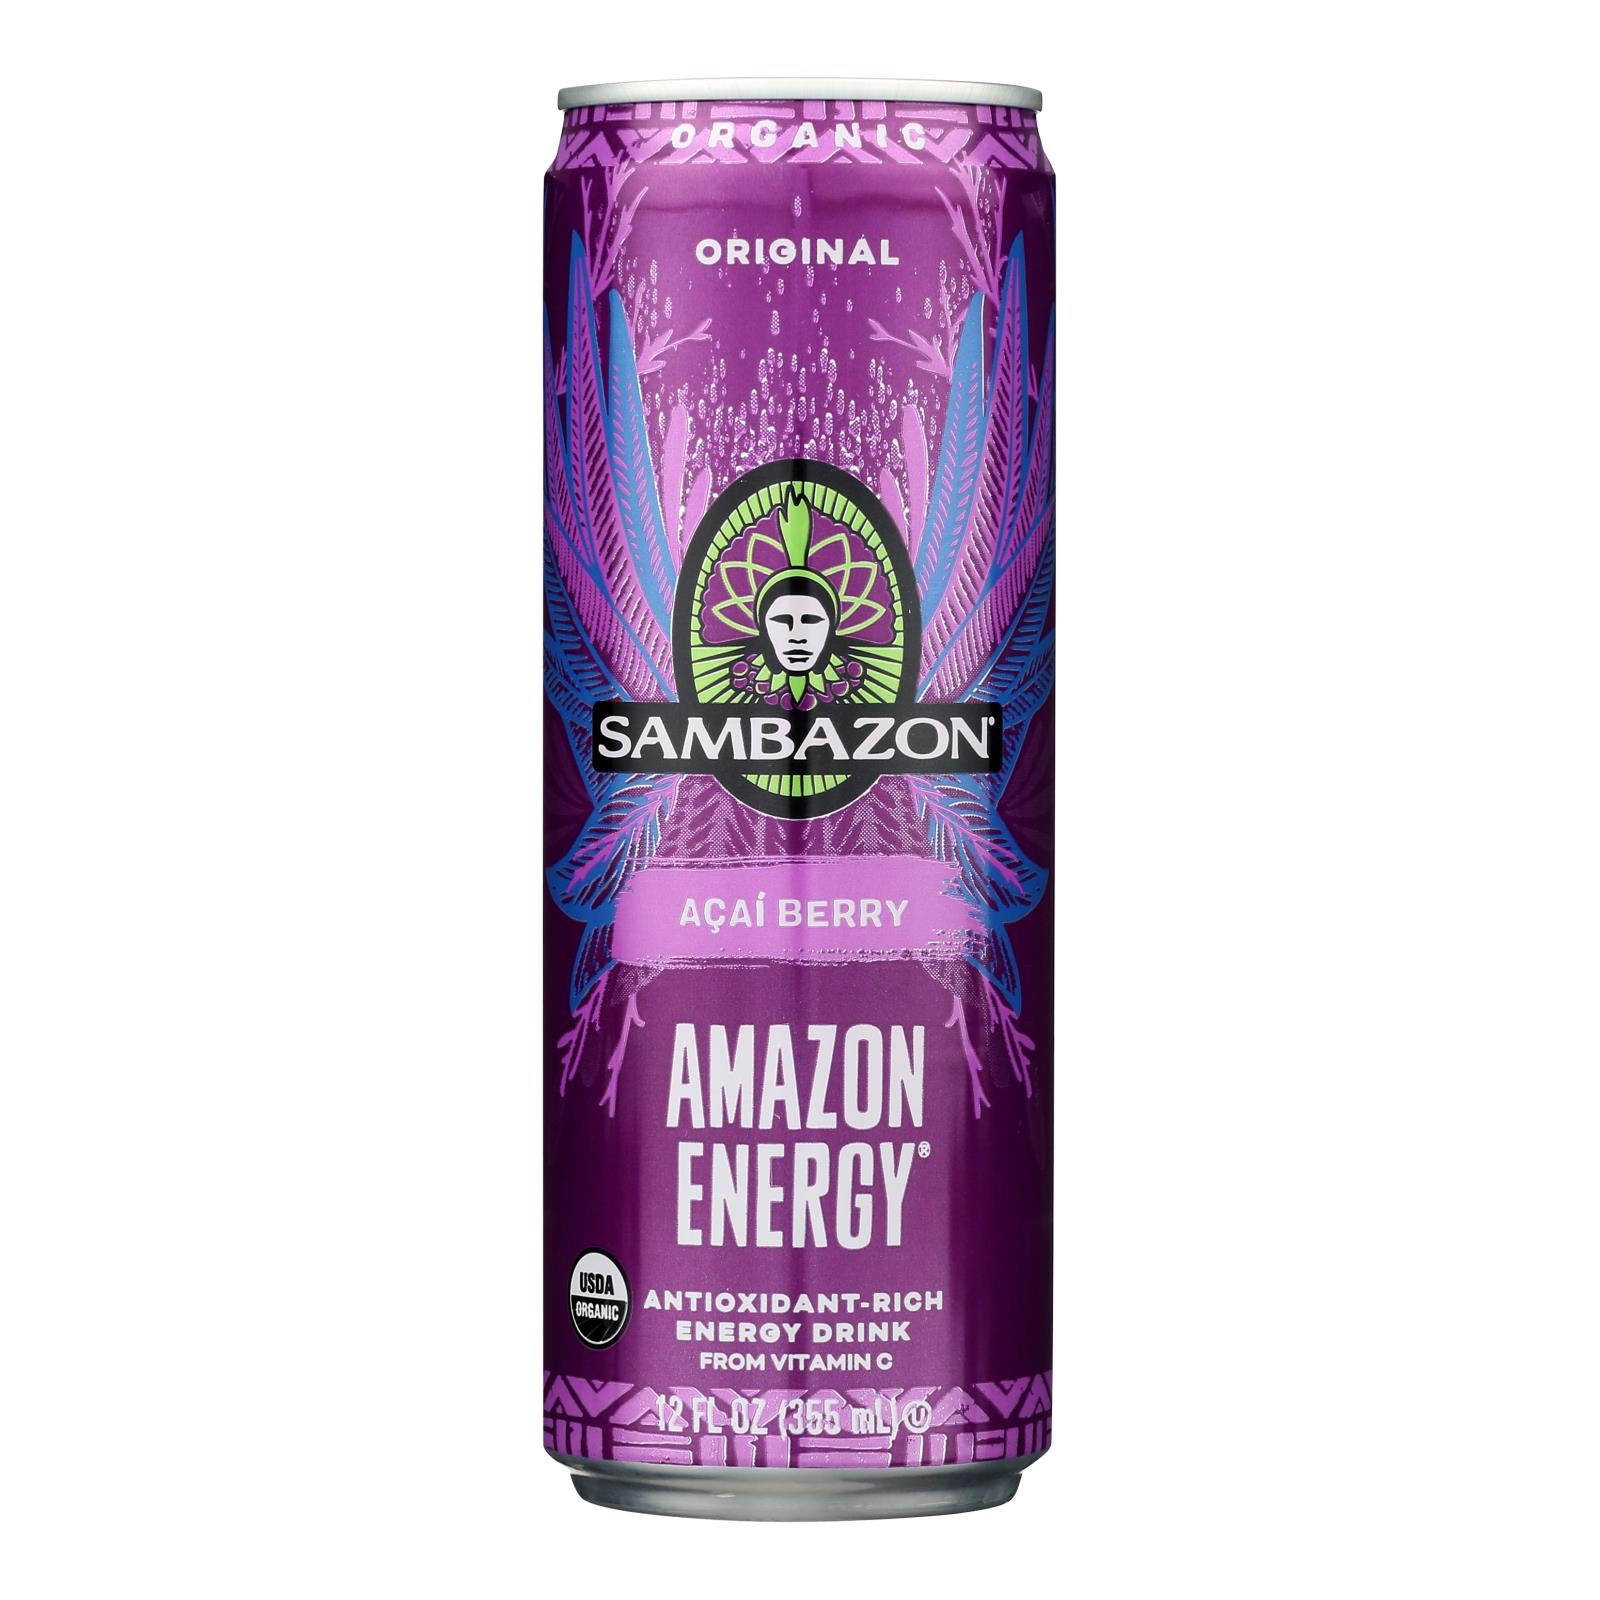 Sambazon Organic Amazon Energy Drink - Original - Case Of 12 - 12 Fl Oz